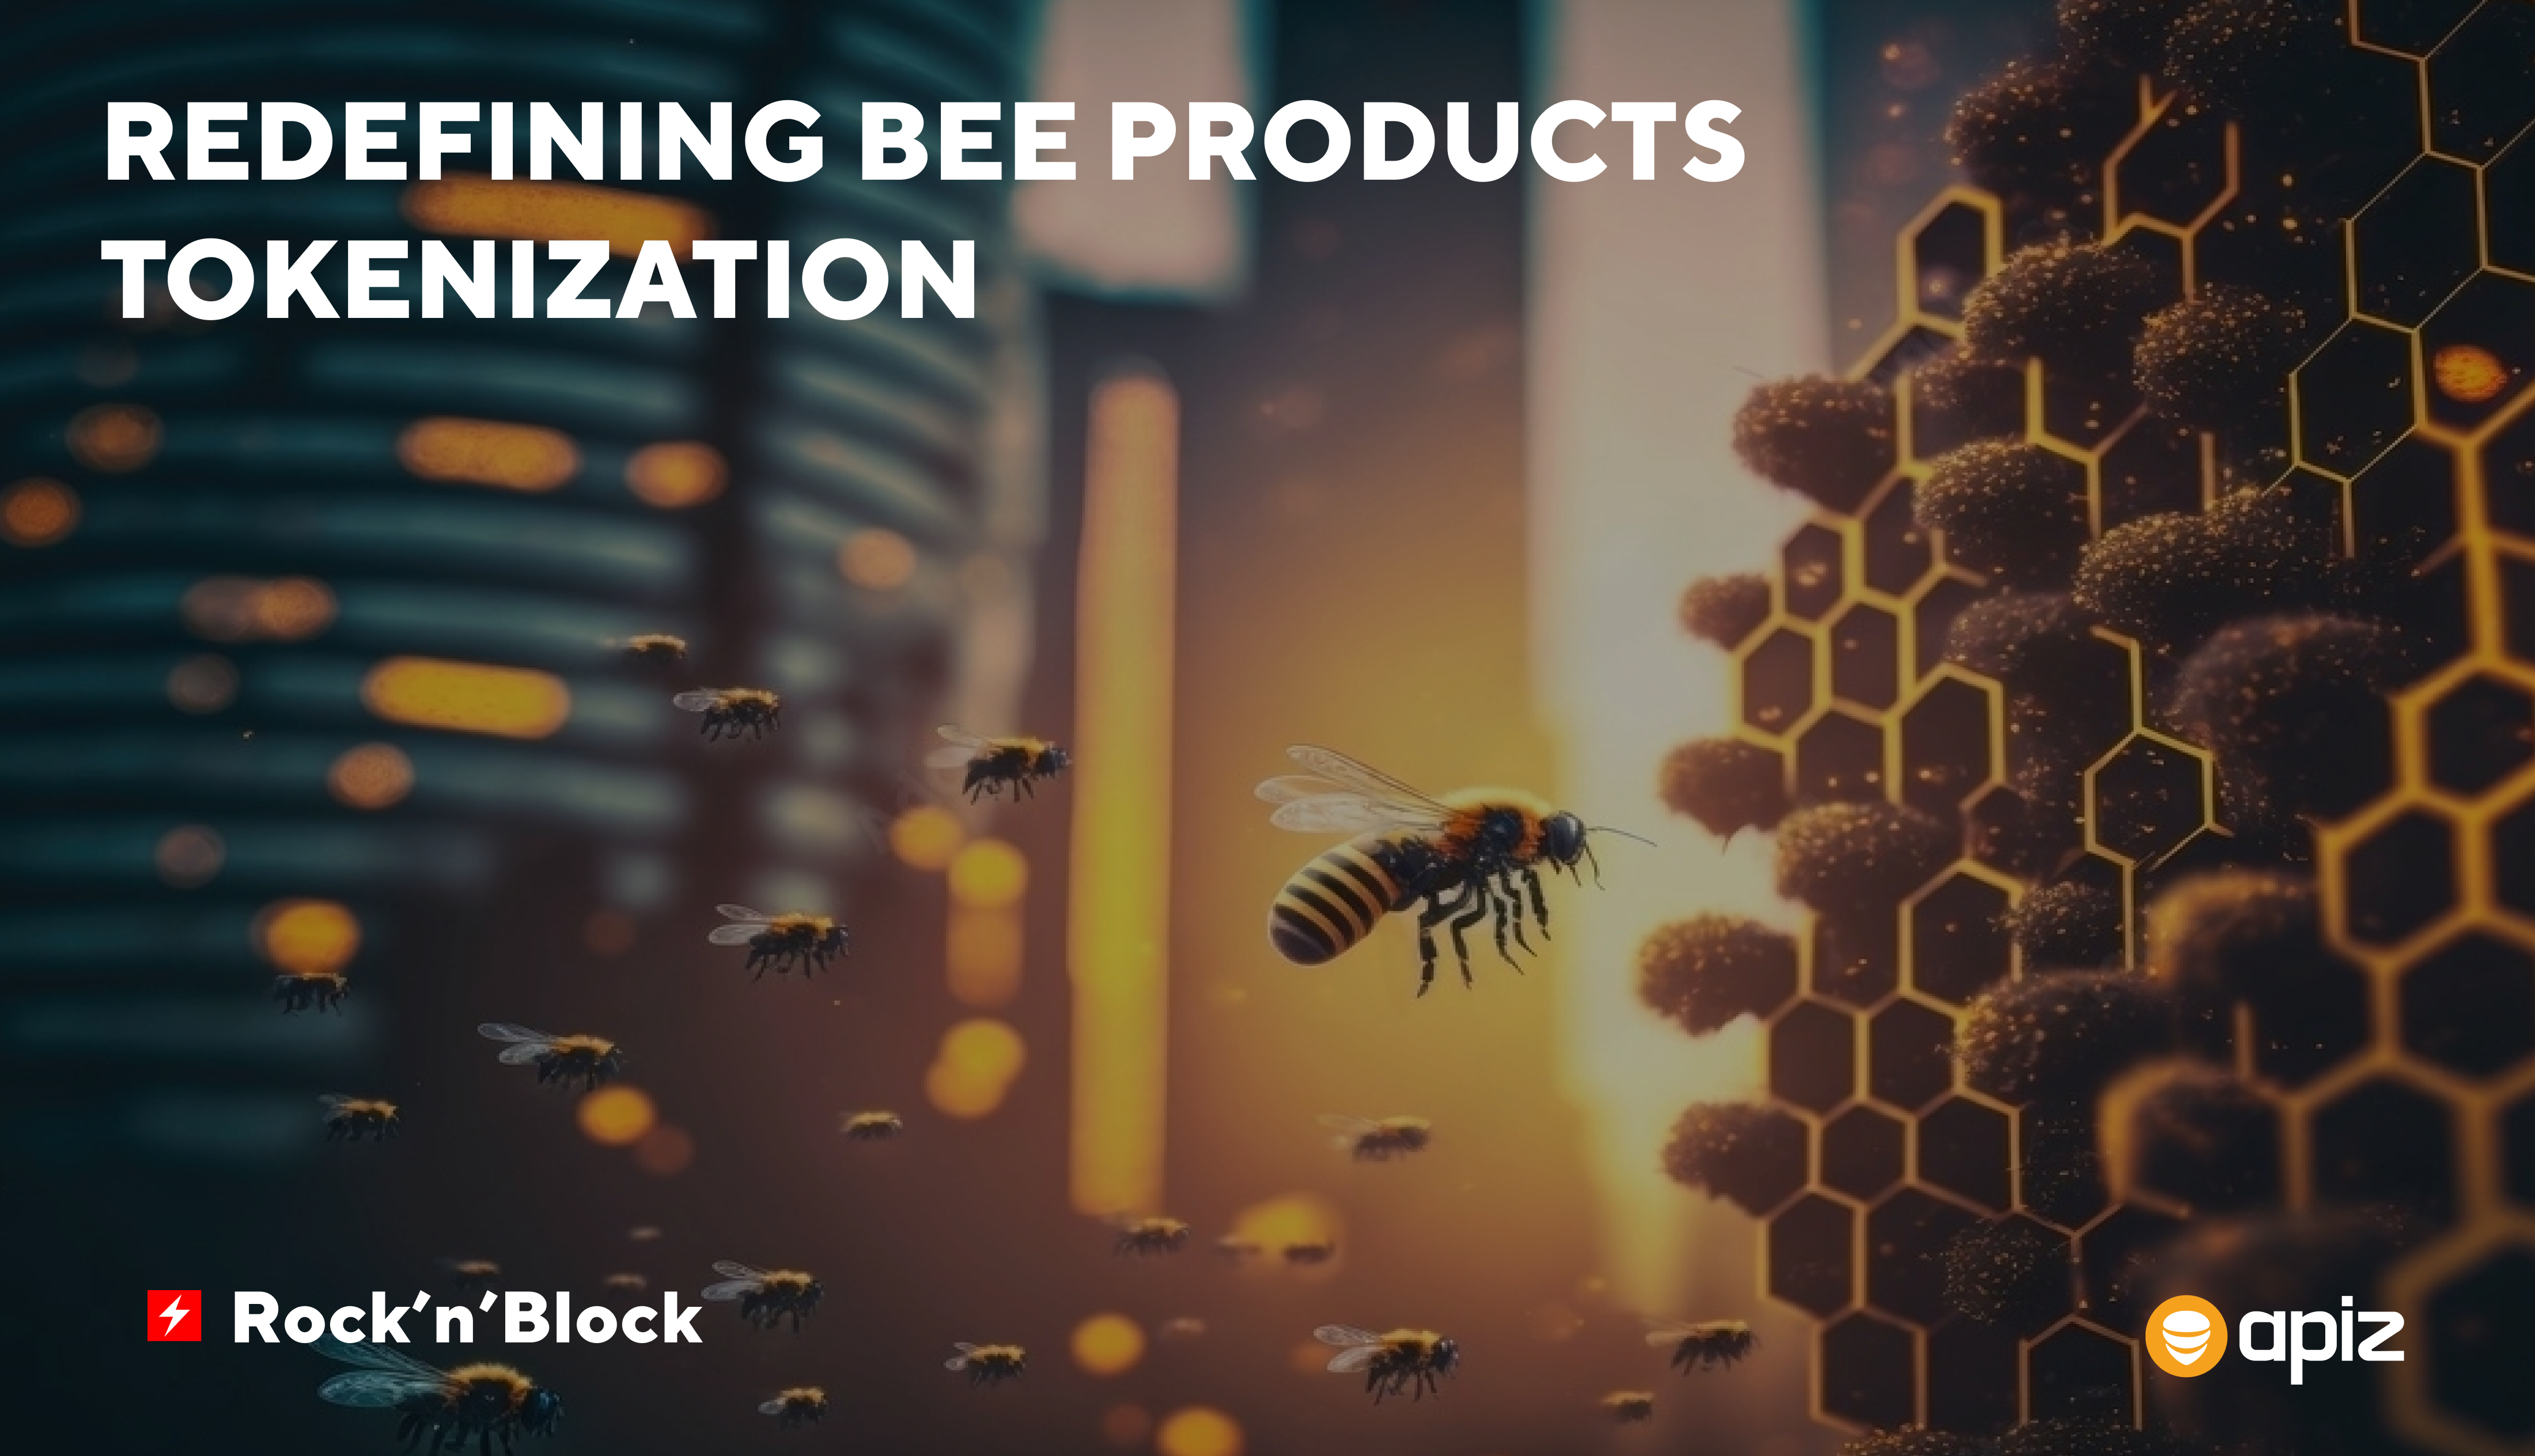 APIZ and Rock'n'Block, blockchain development partnership, is revolutionising bee hives tokenization through innovative intelligent contracts, staking contract development, buyback contracts development, and real-world asset tokenization.